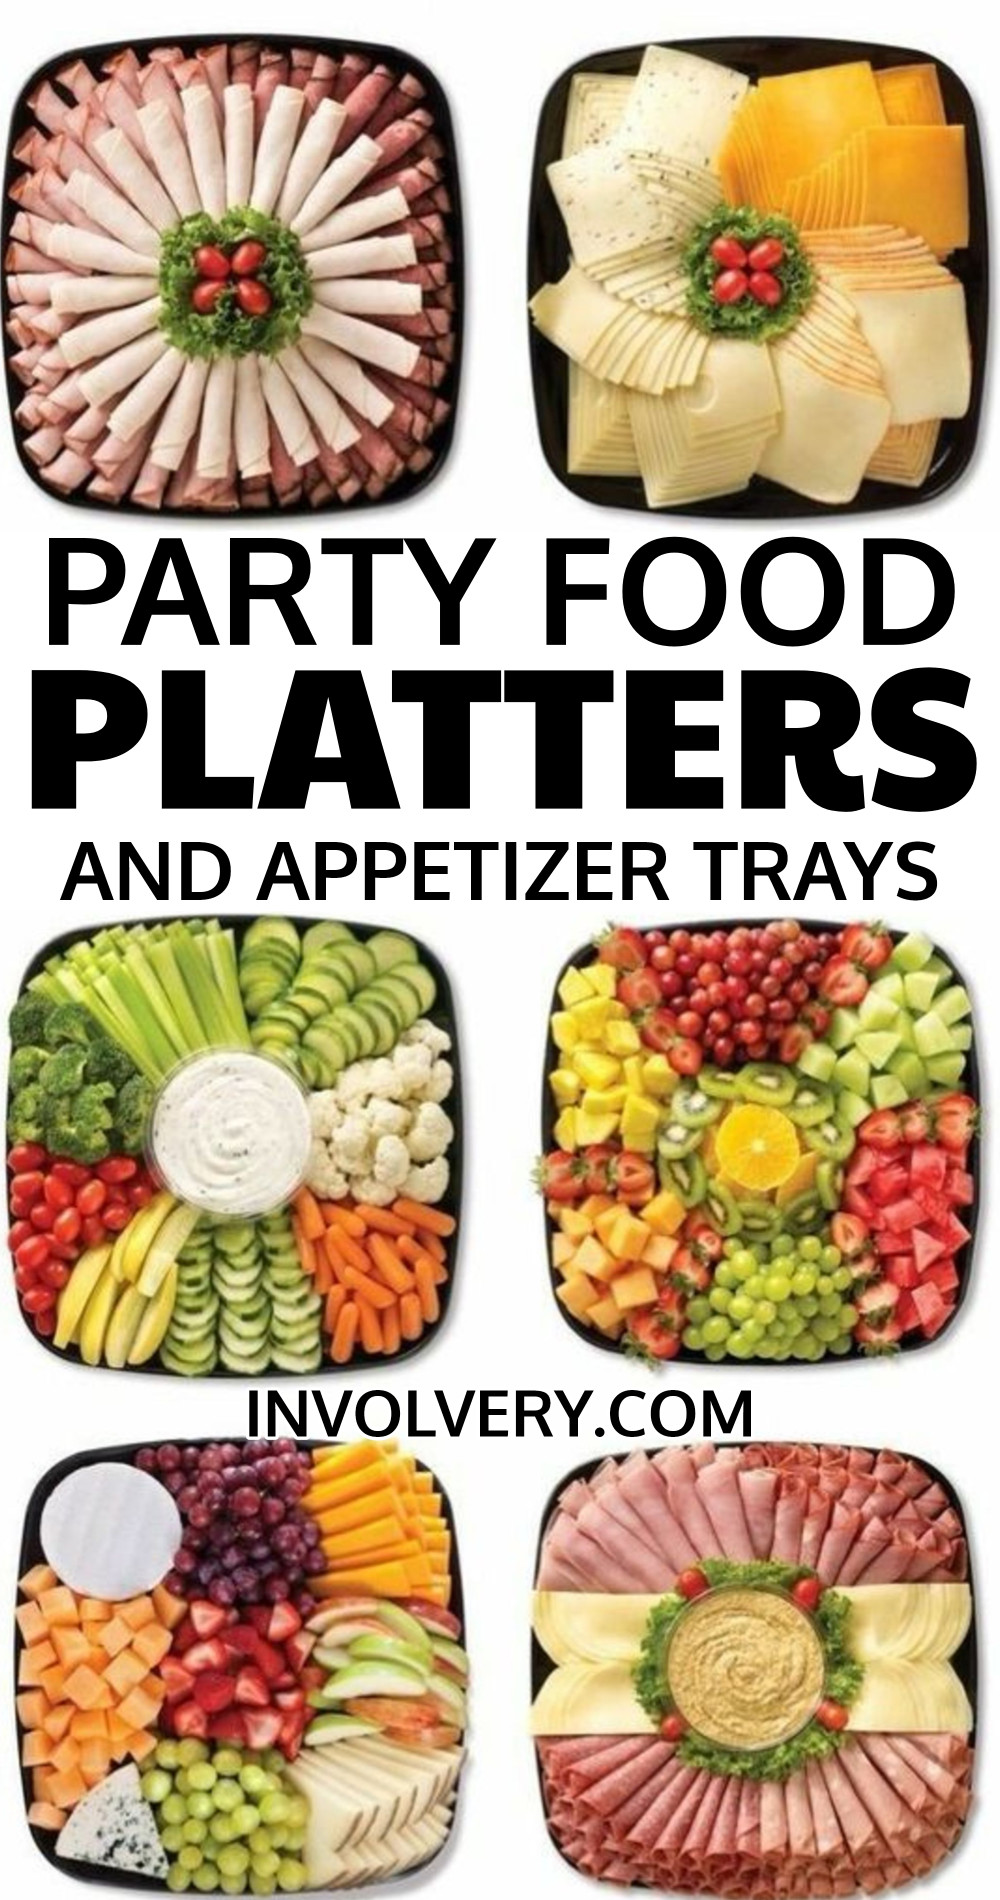 6 party platters and appetizer trays arrangements